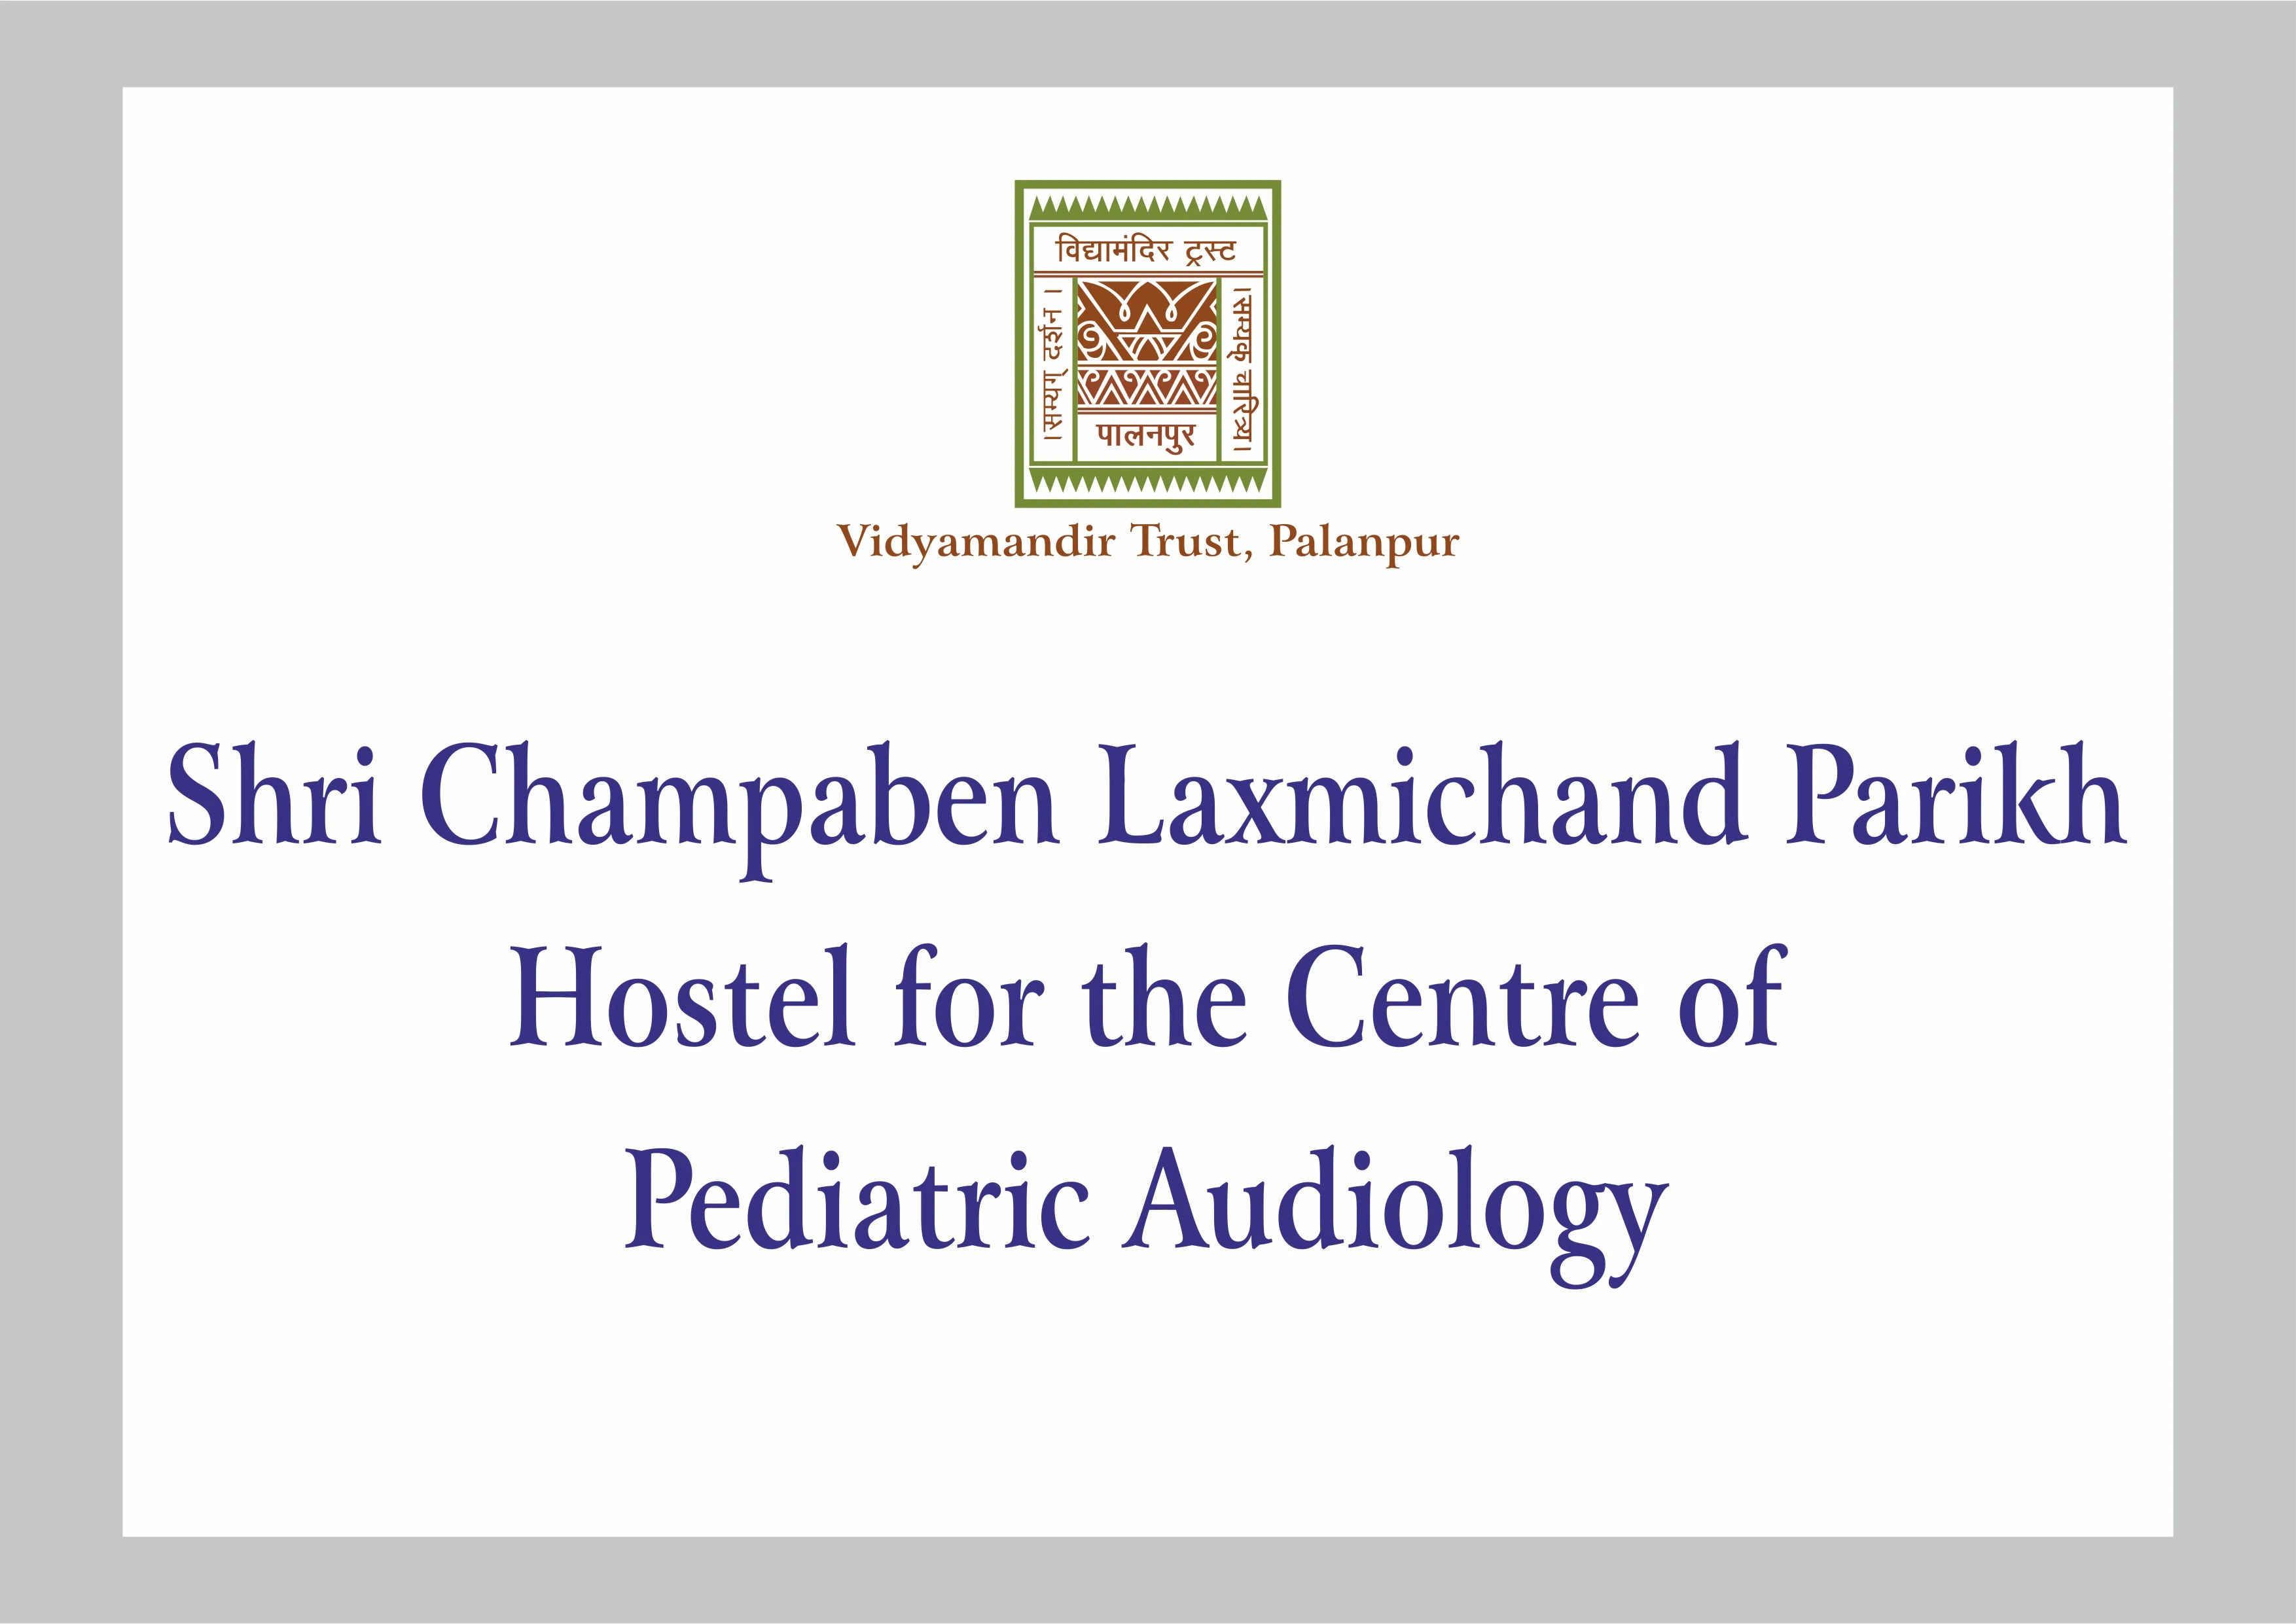 Shri Champaben Laxmichand Parikh Hostel for the Centre of Pediatric Audiology - Building Photo